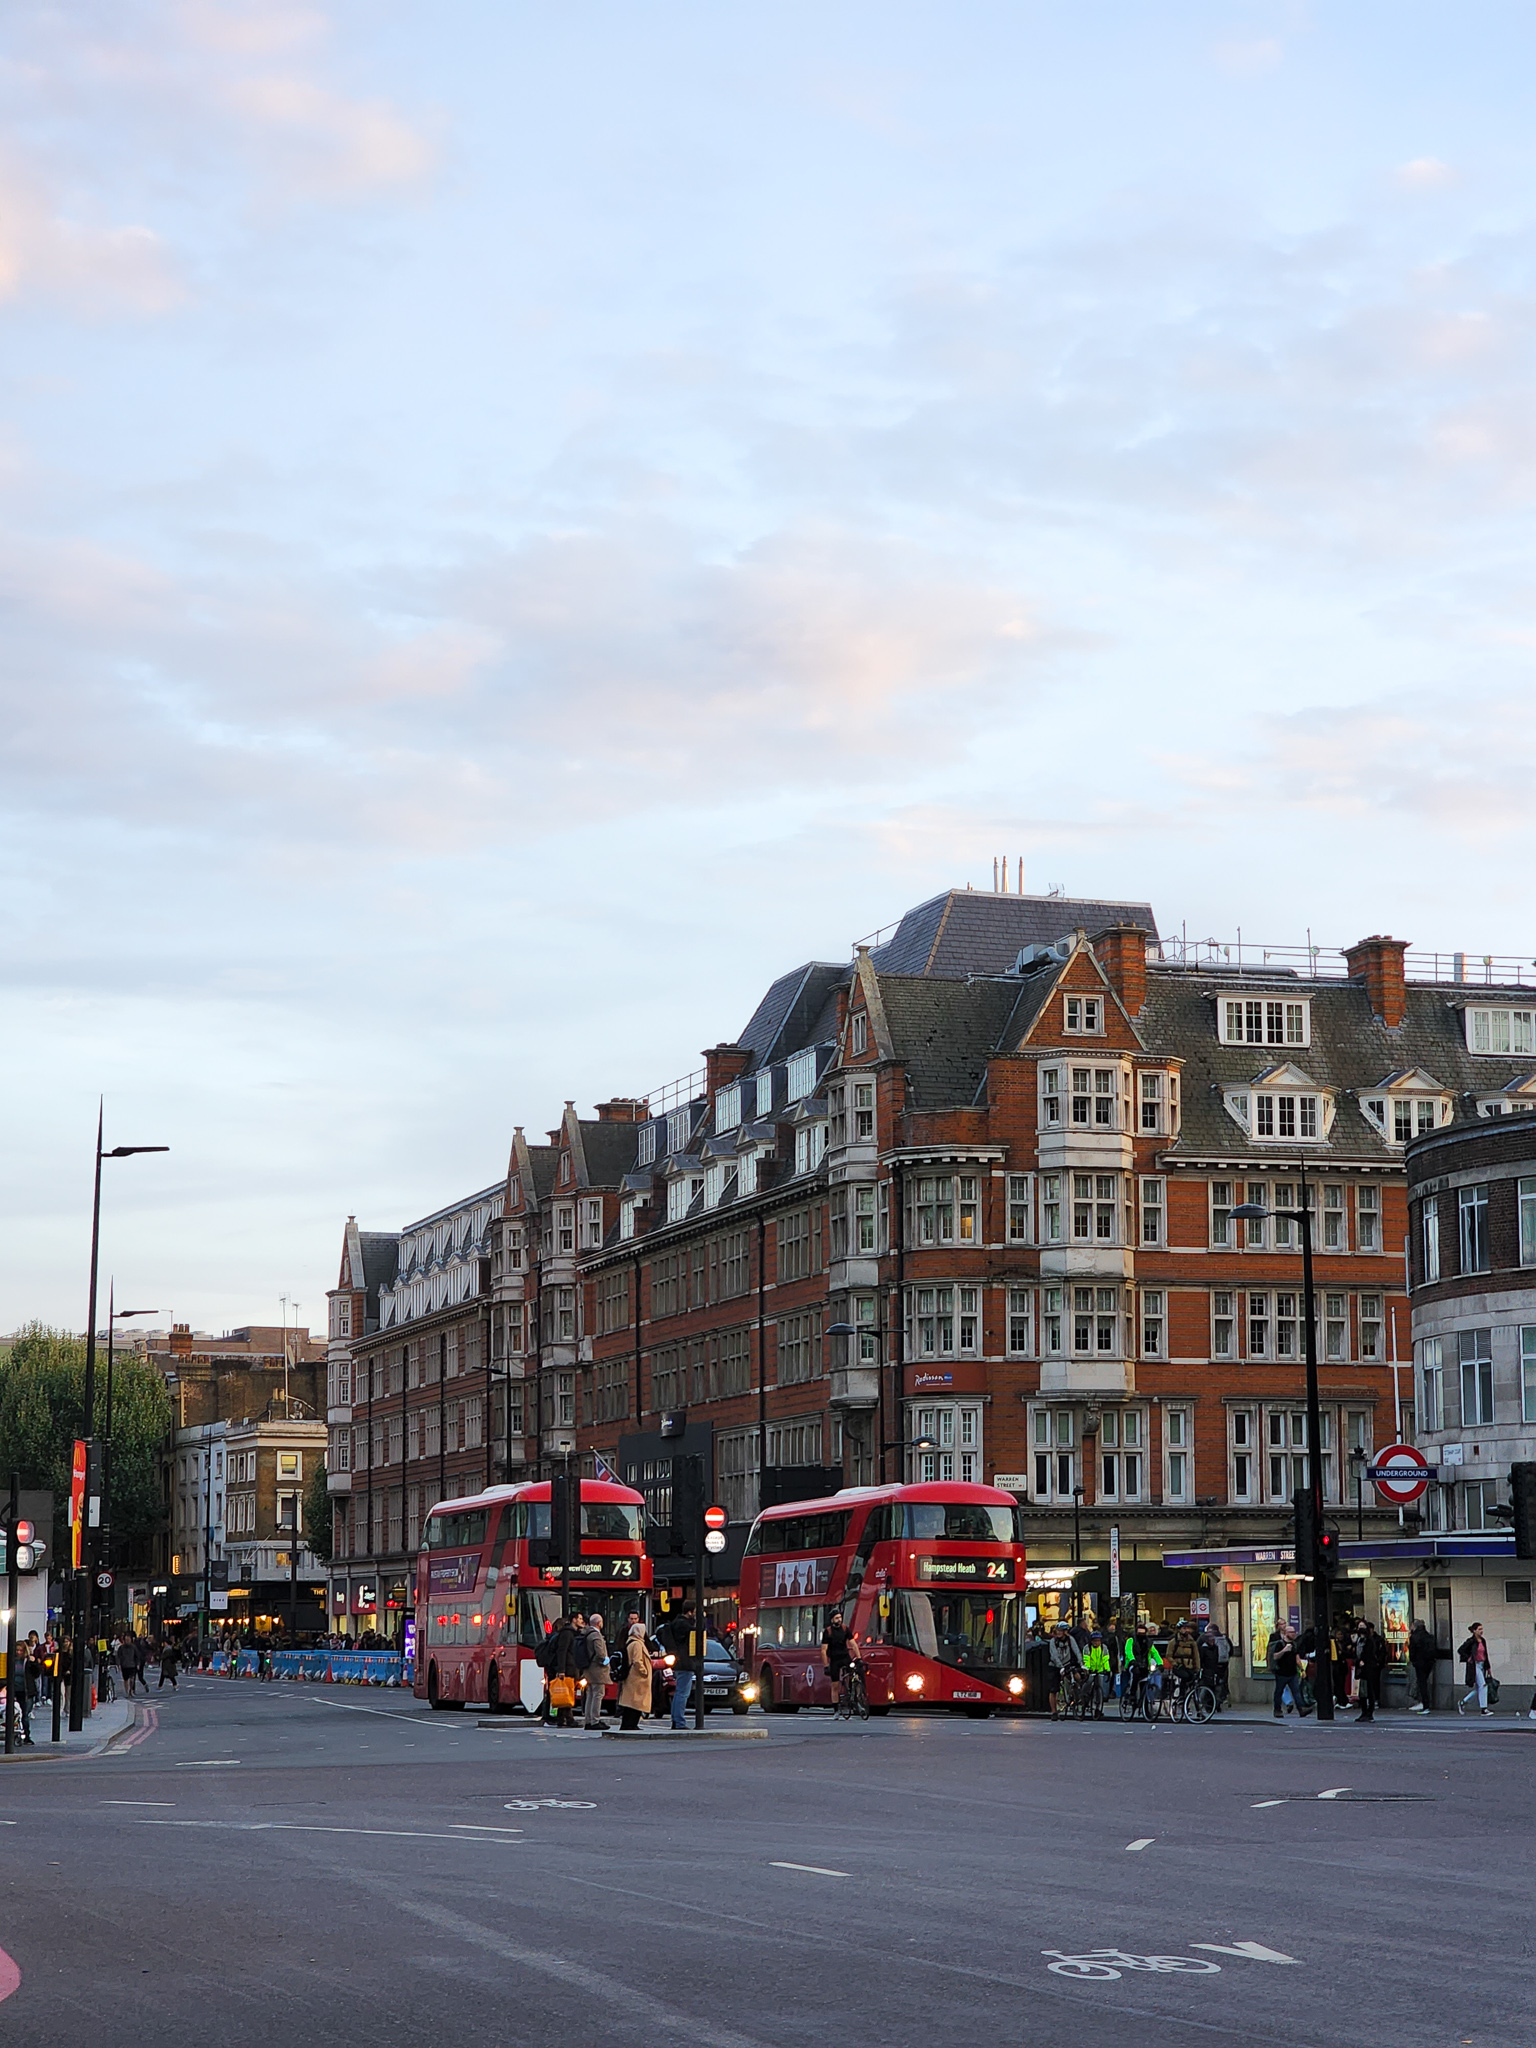 London great neighbourhoods to see